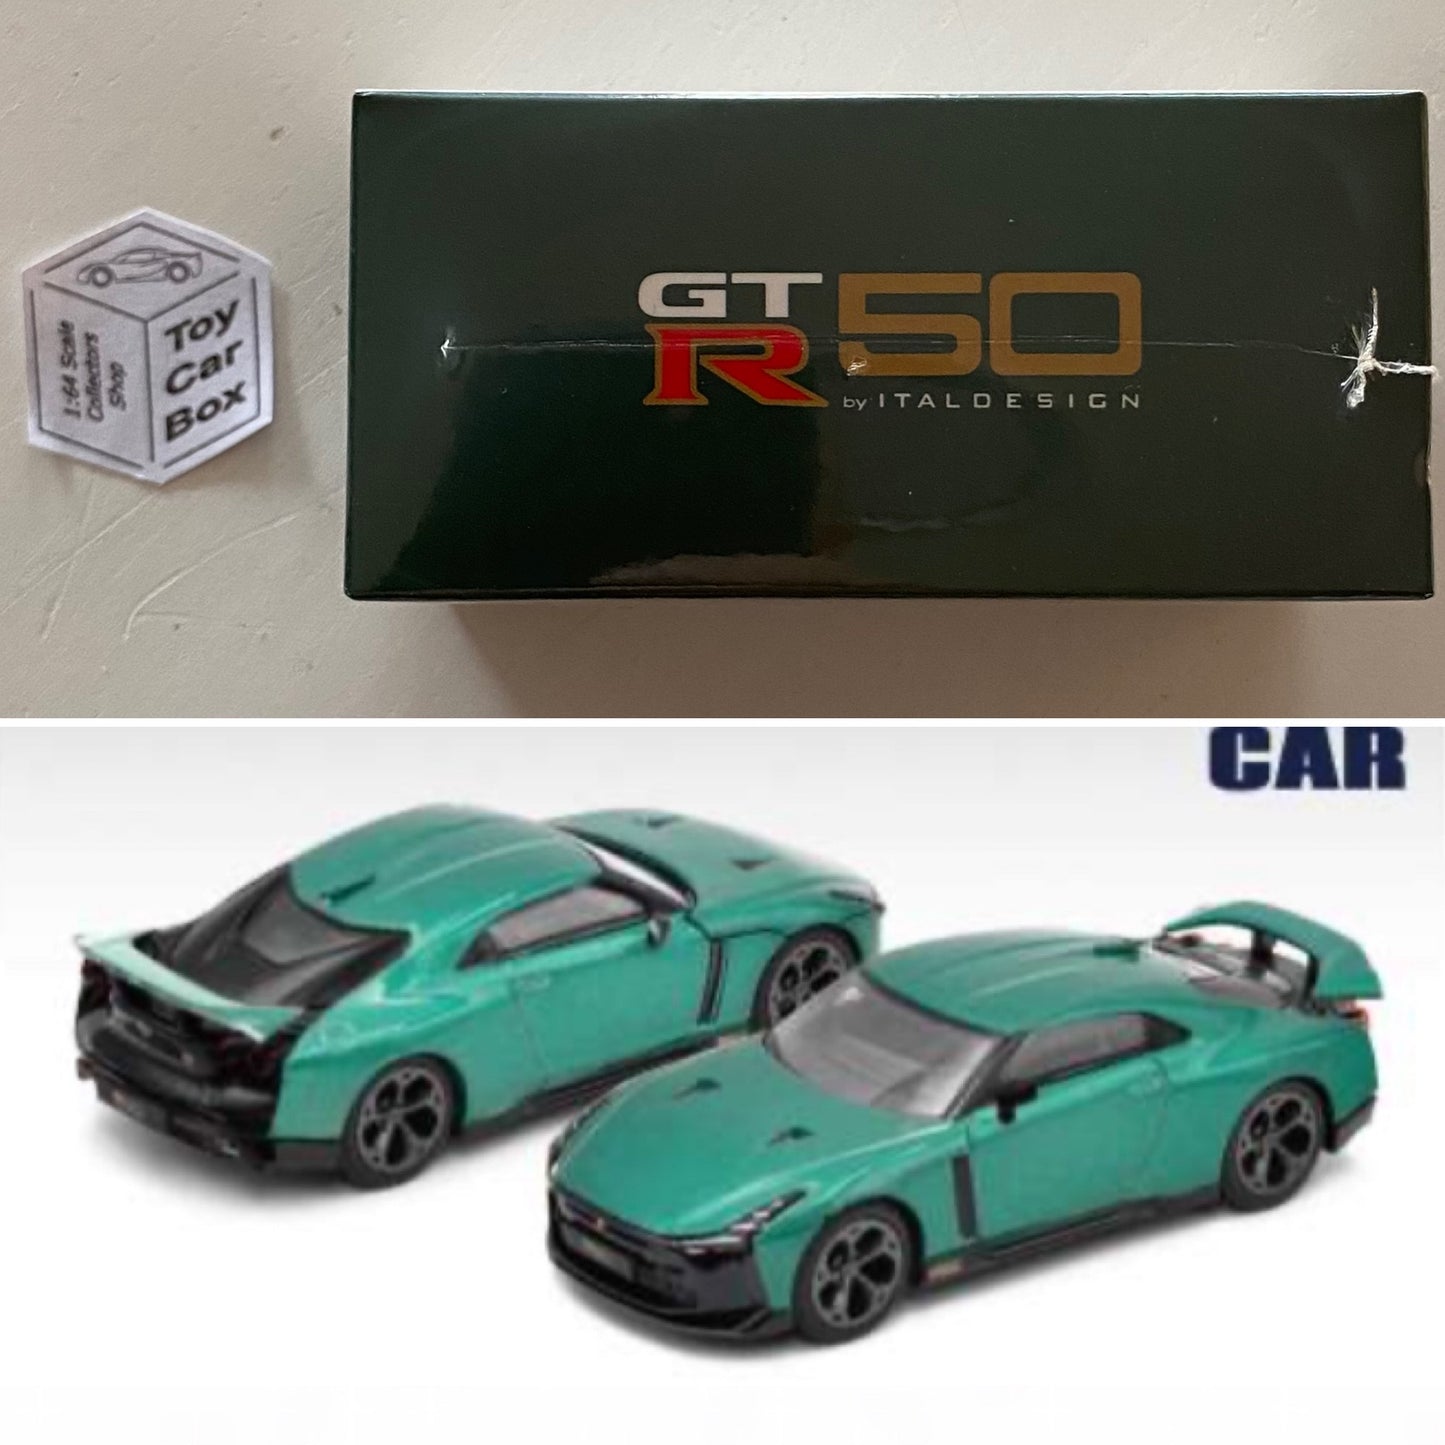 ERA CAR - Nissan GT-R50 By Italdesign (1:64 Scale - Green - Boxed) J92g